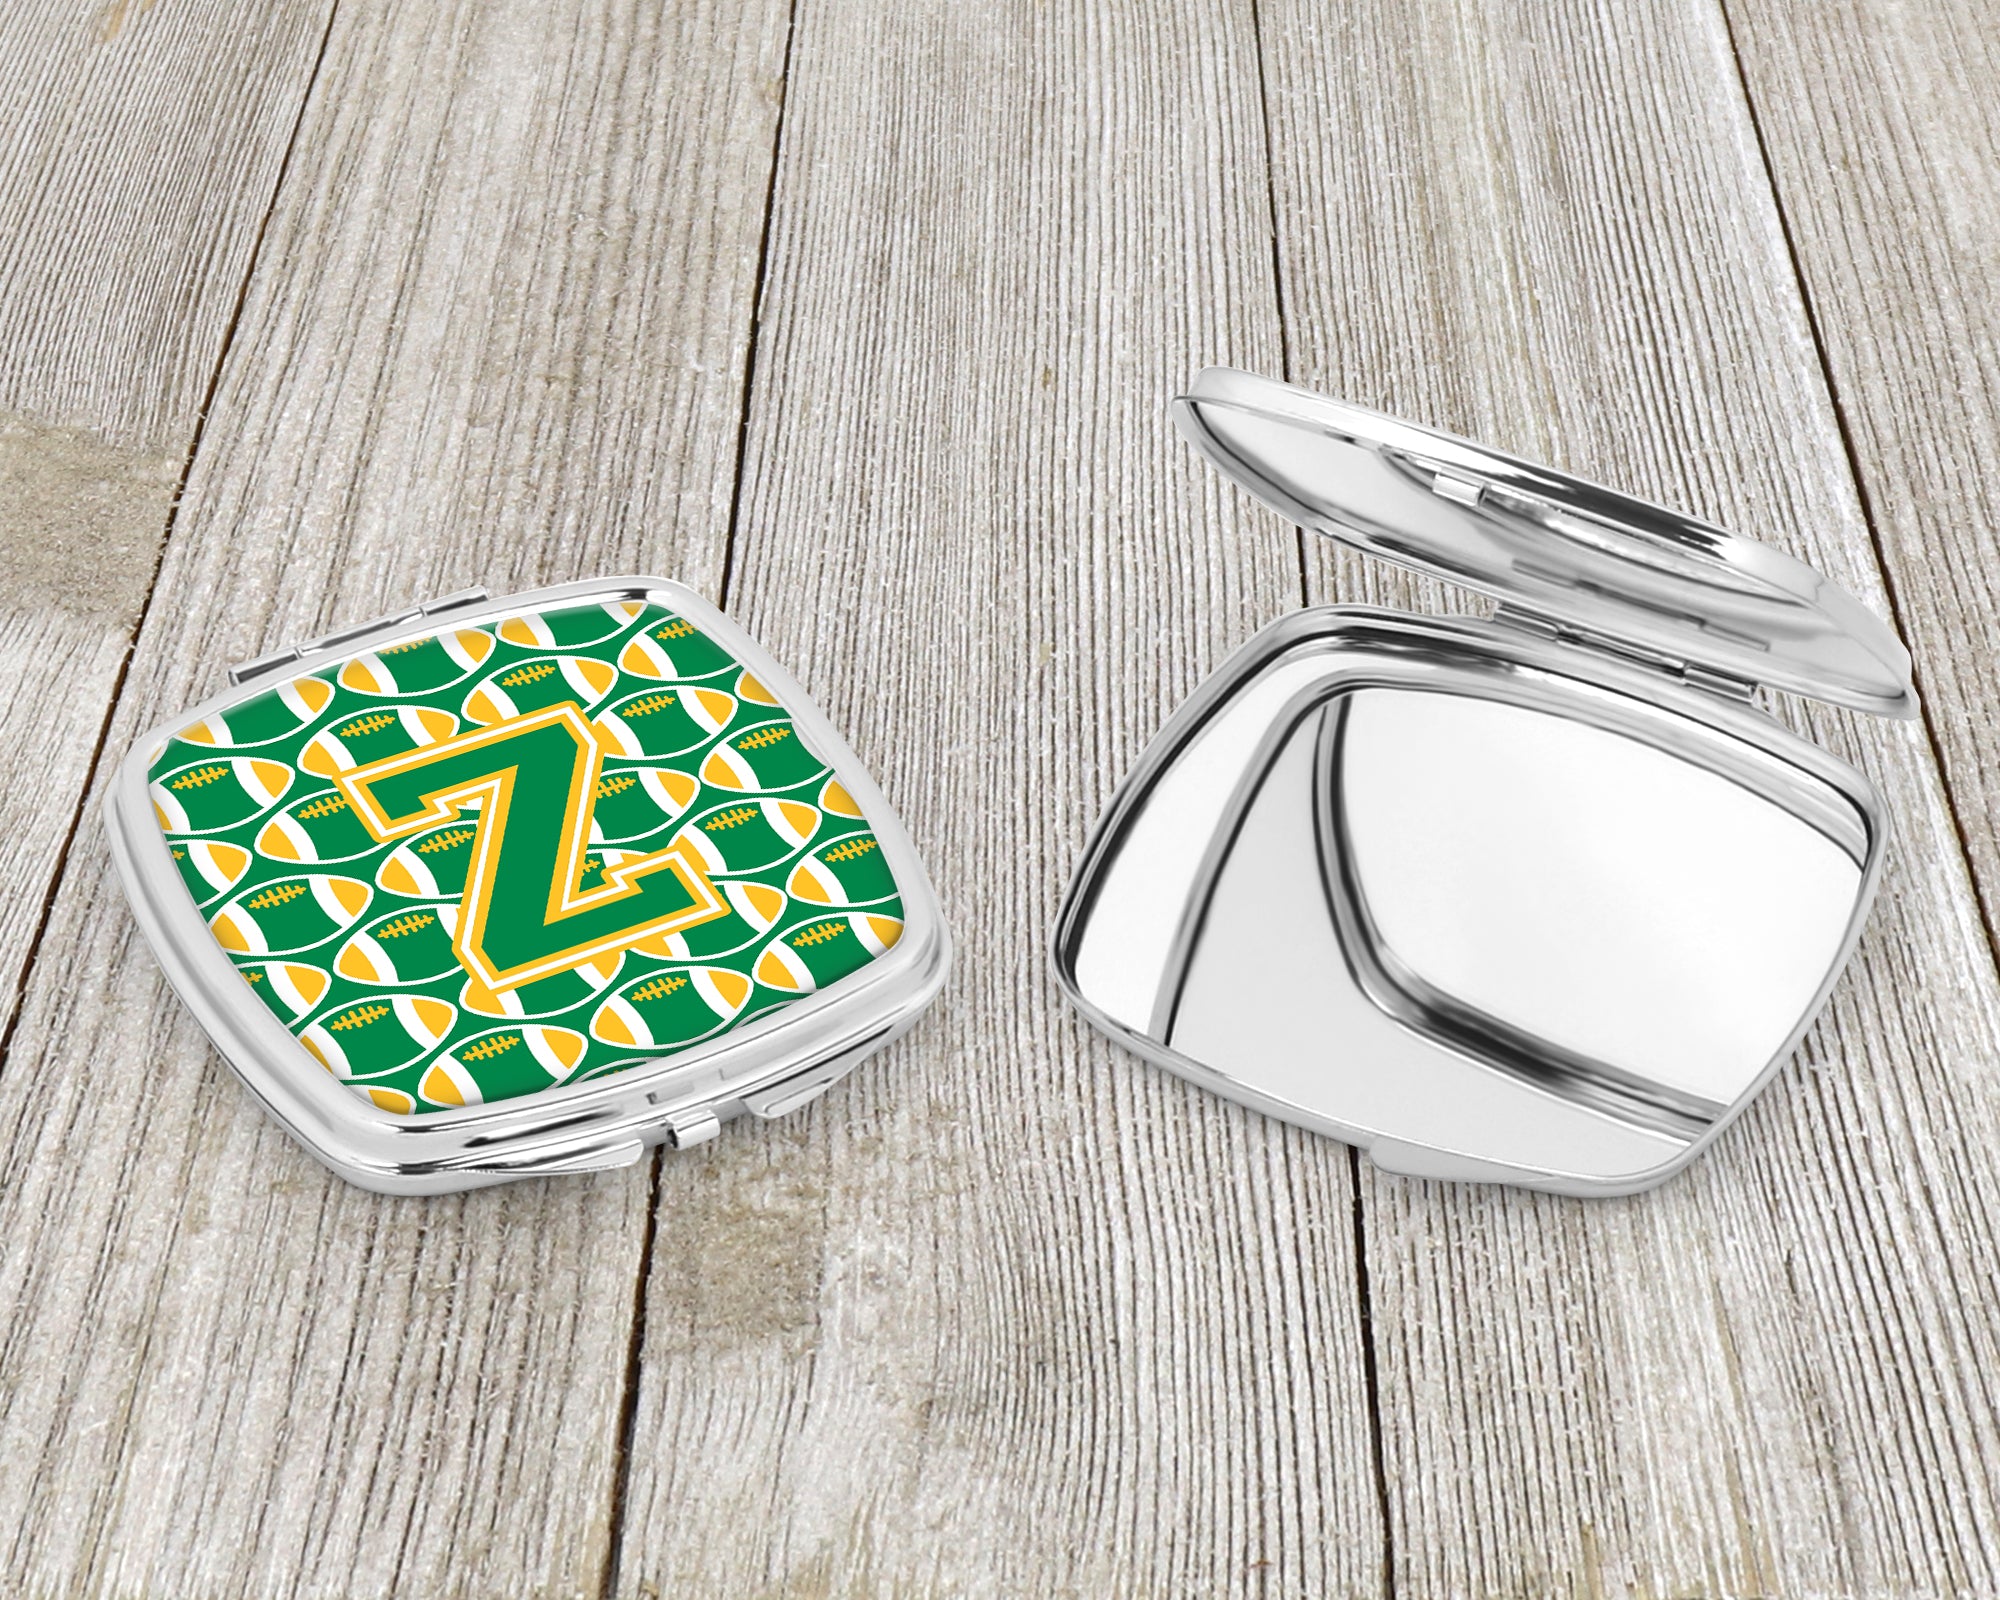 Miroir compact lettre Z football vert et or CJ1069-ZSCM